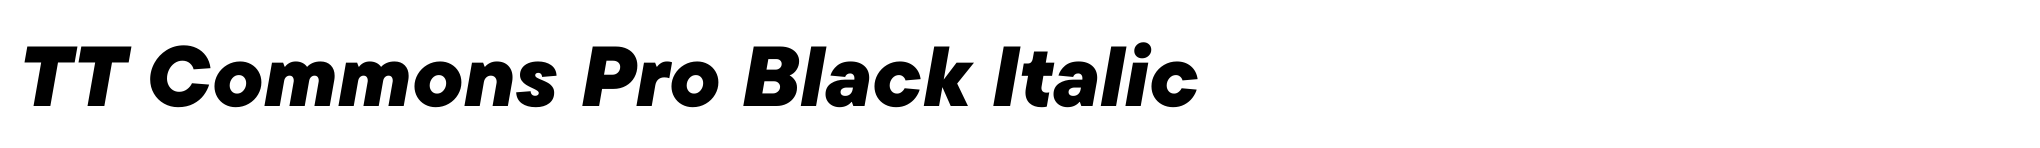 TT Commons Pro Black Italic image